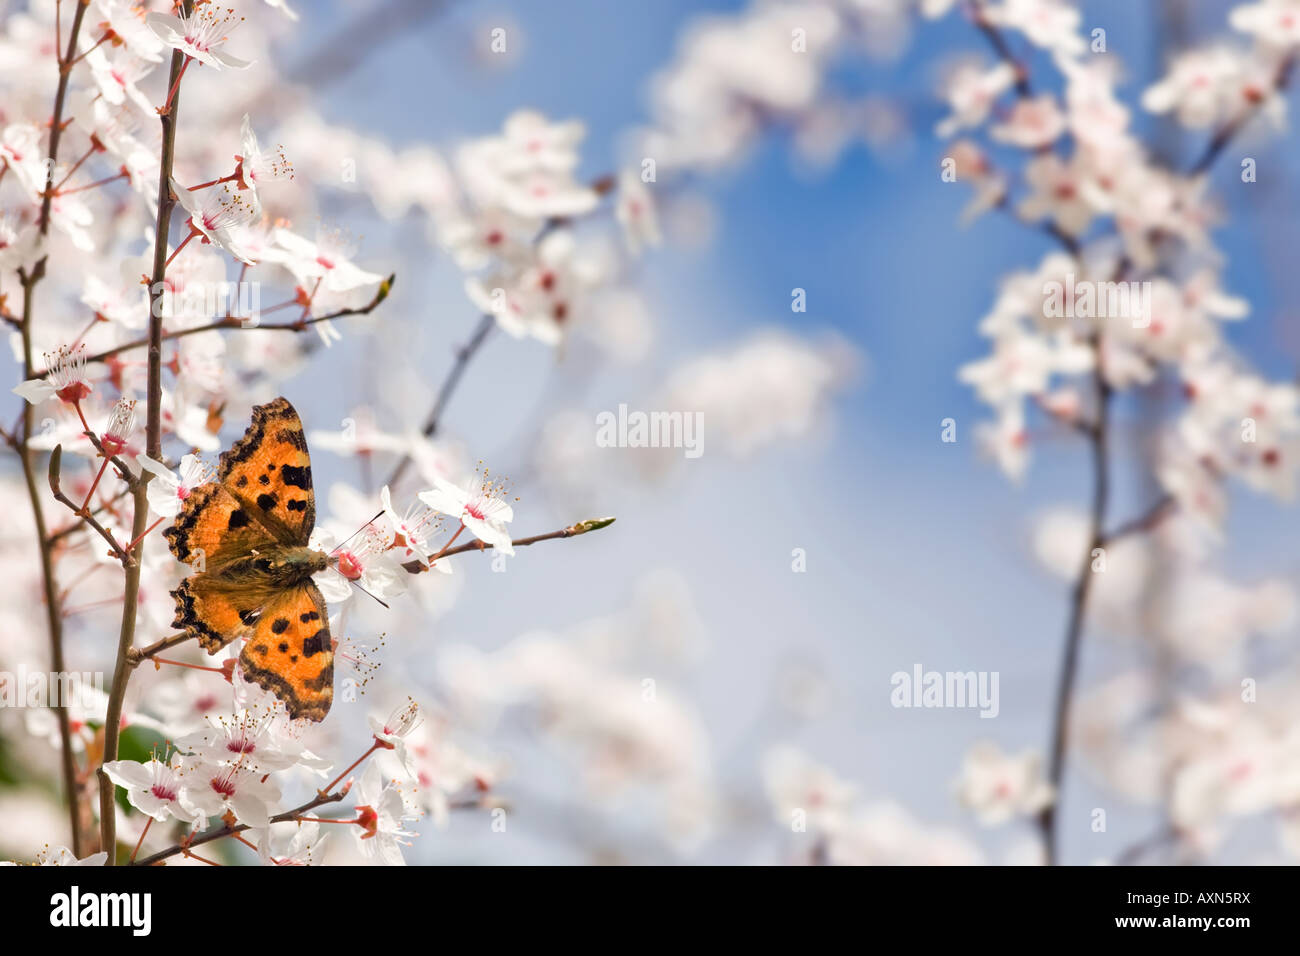 Nymphalis Polychloros Schmetterling auf Pflaumenbaum Blumen im Frühling Stockfoto